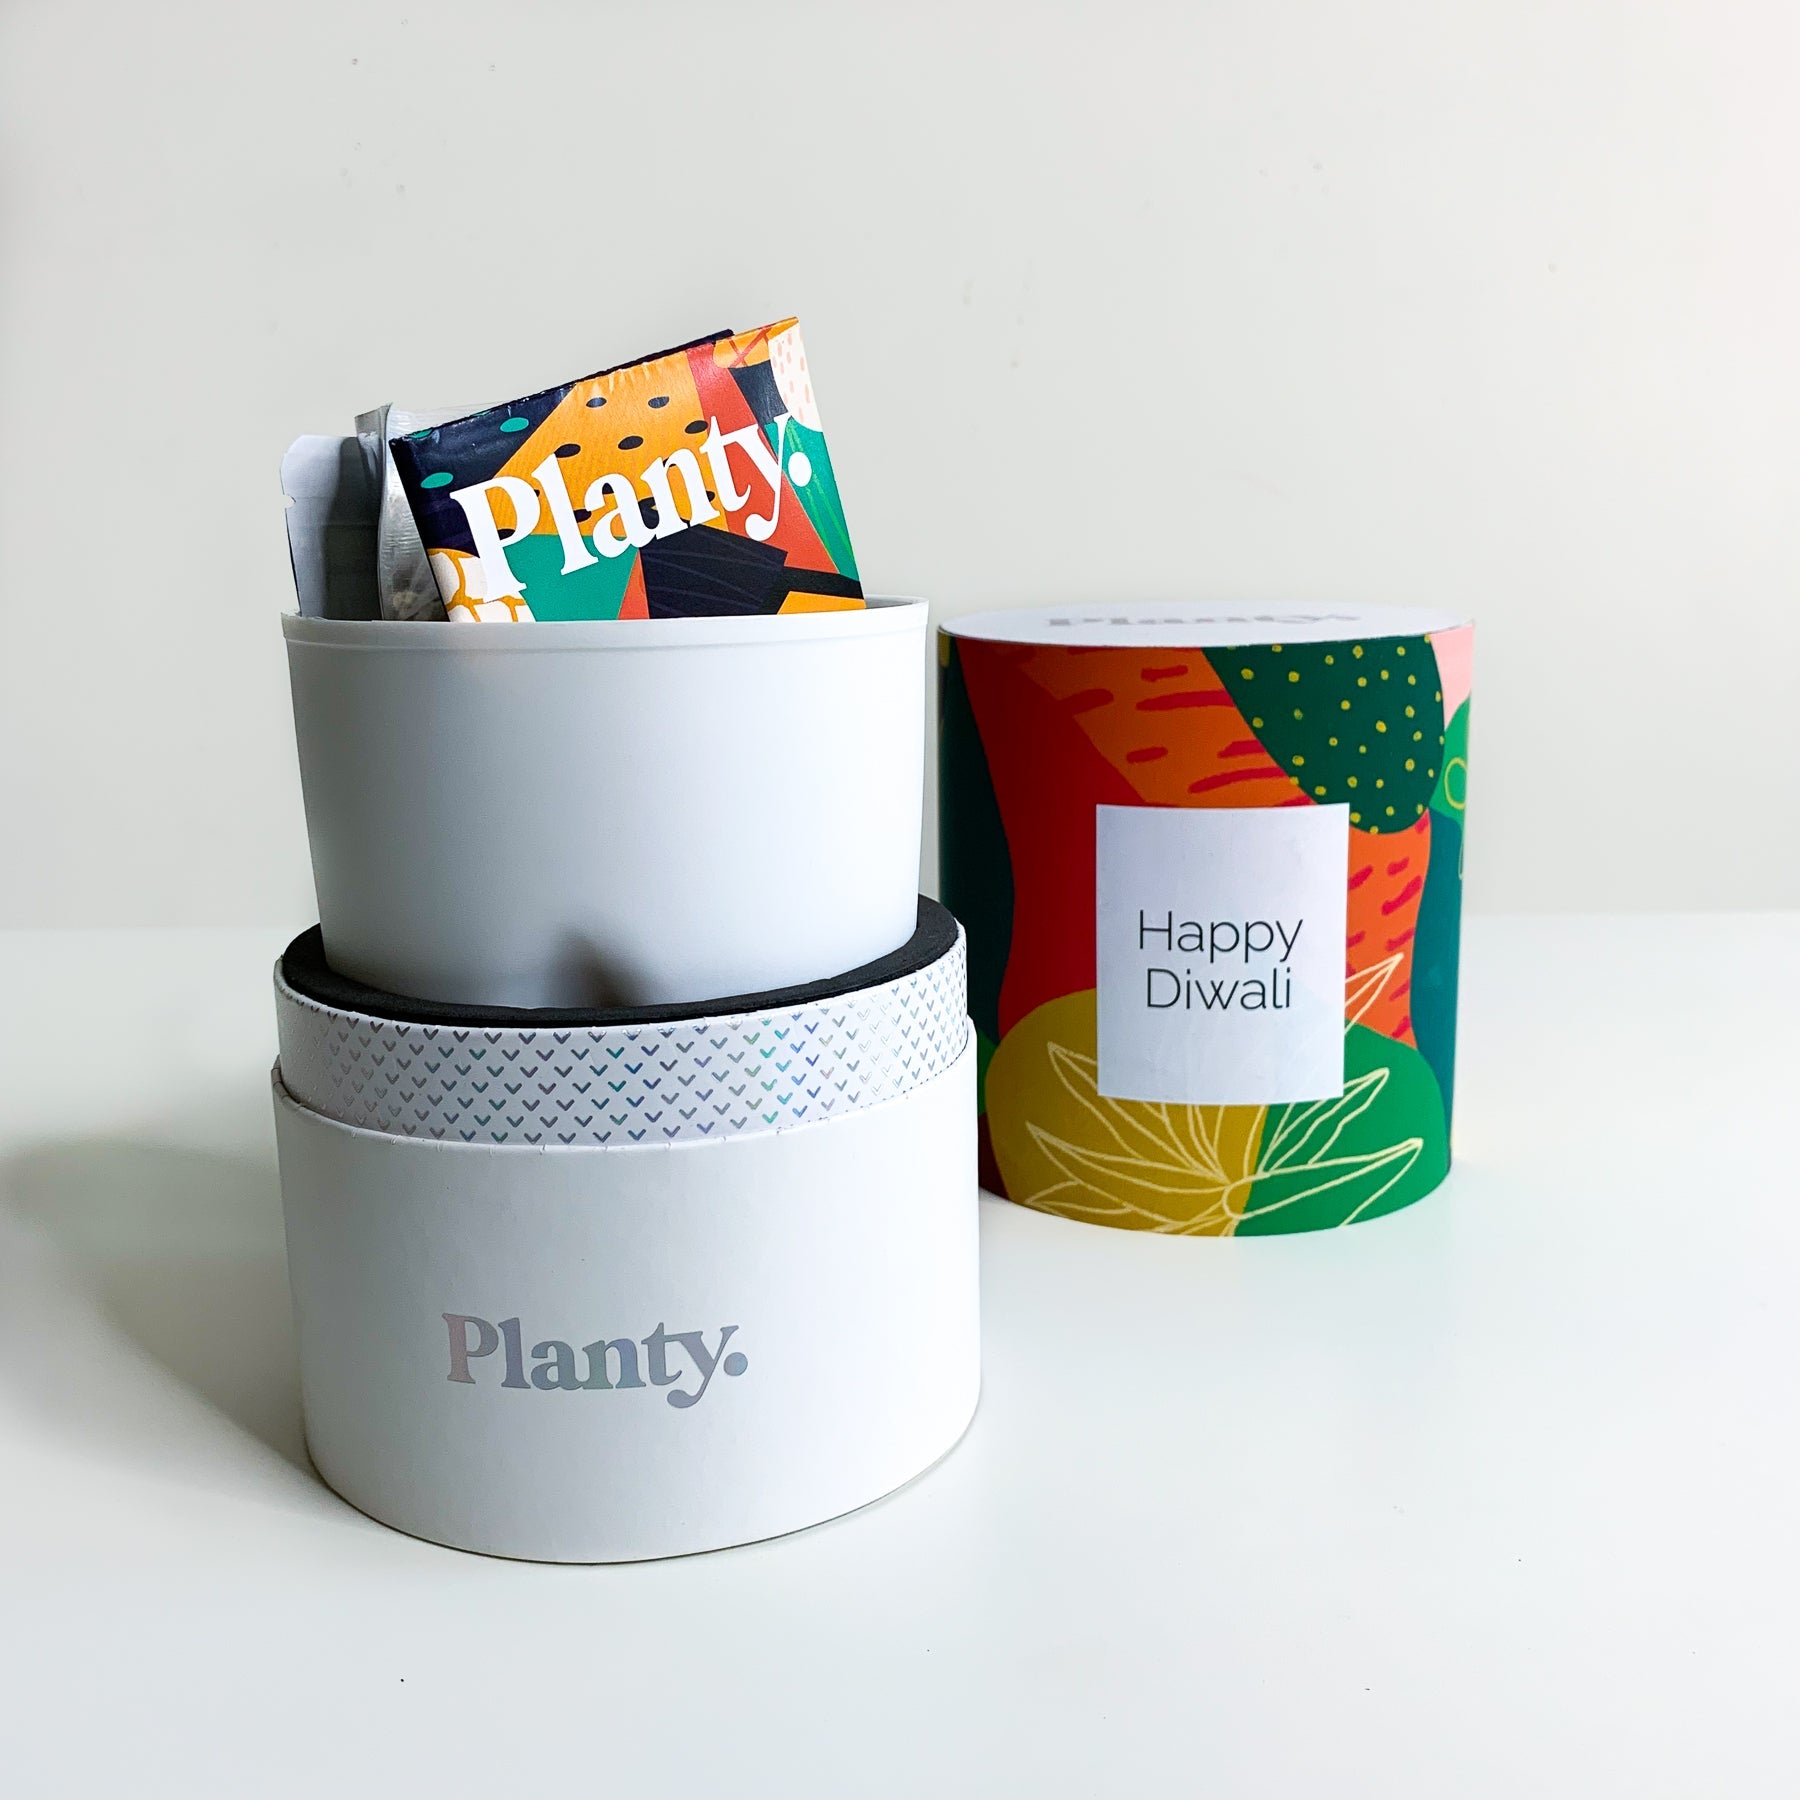 Cilantro Herb Grow Kit - Think Planty